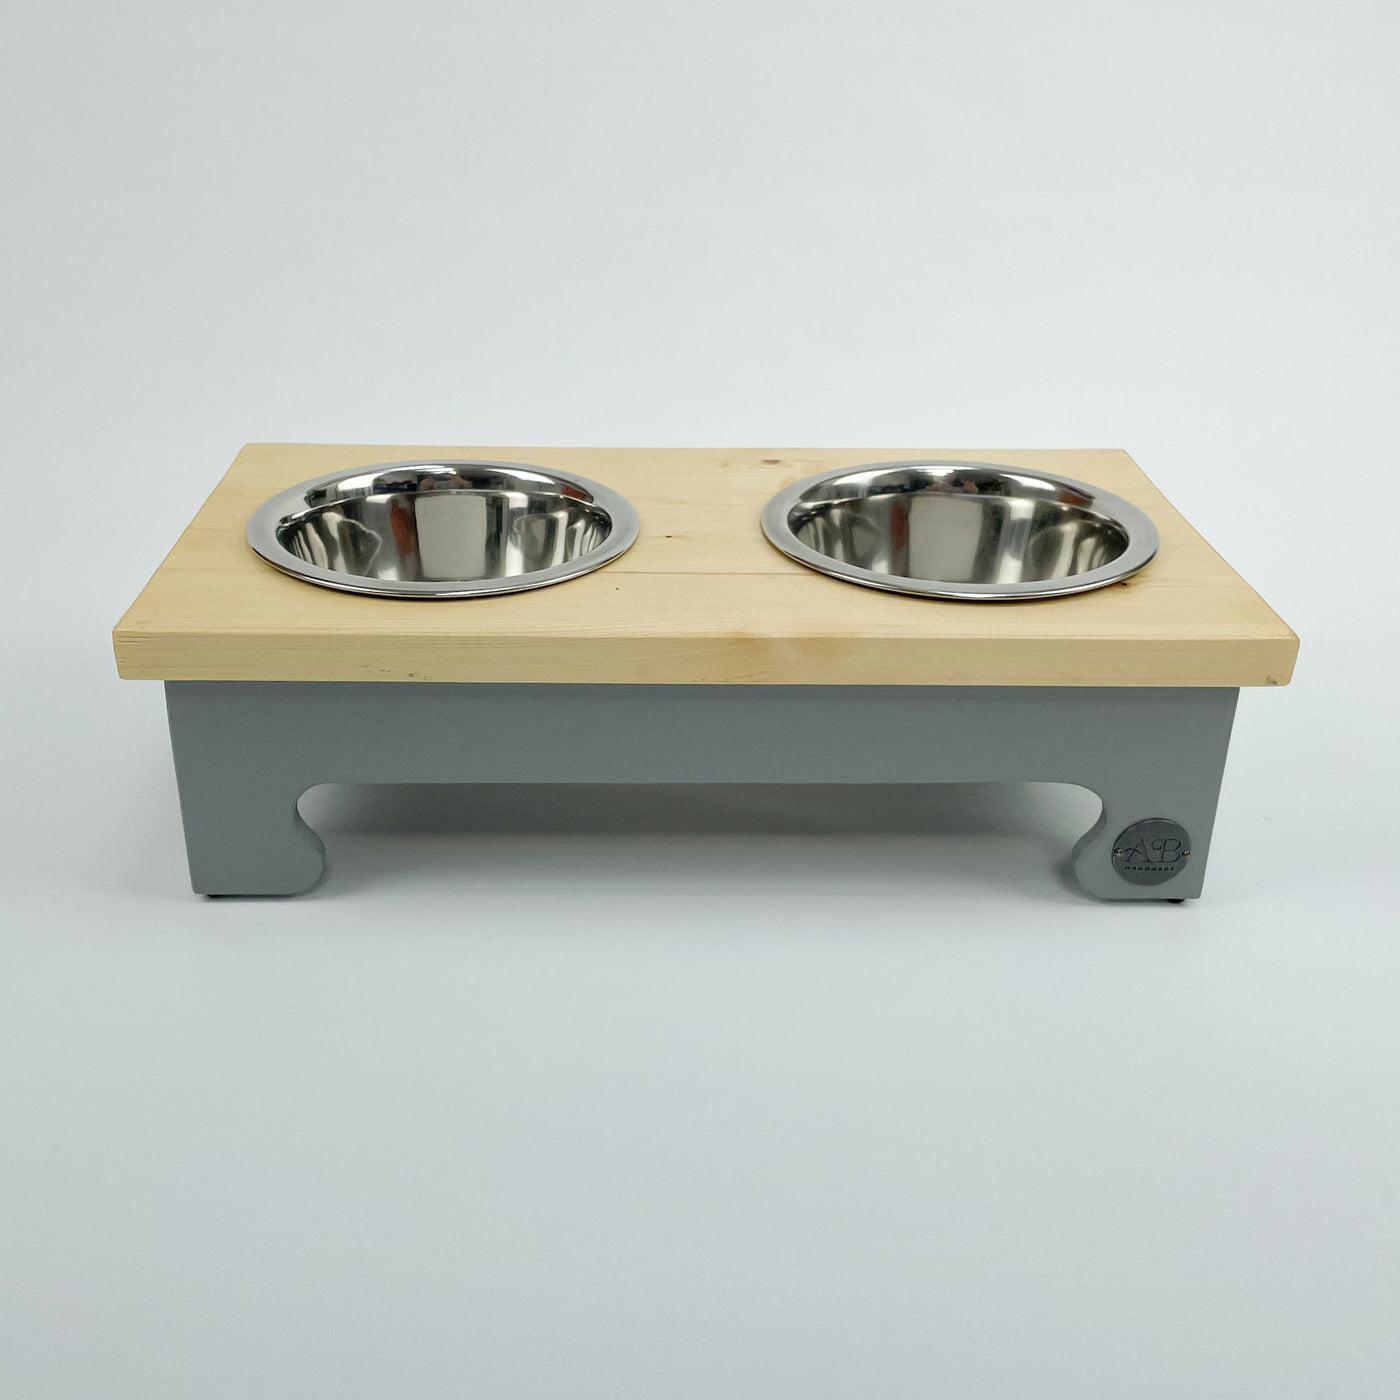 Small pine top raised dog bowl feeding station in grey.